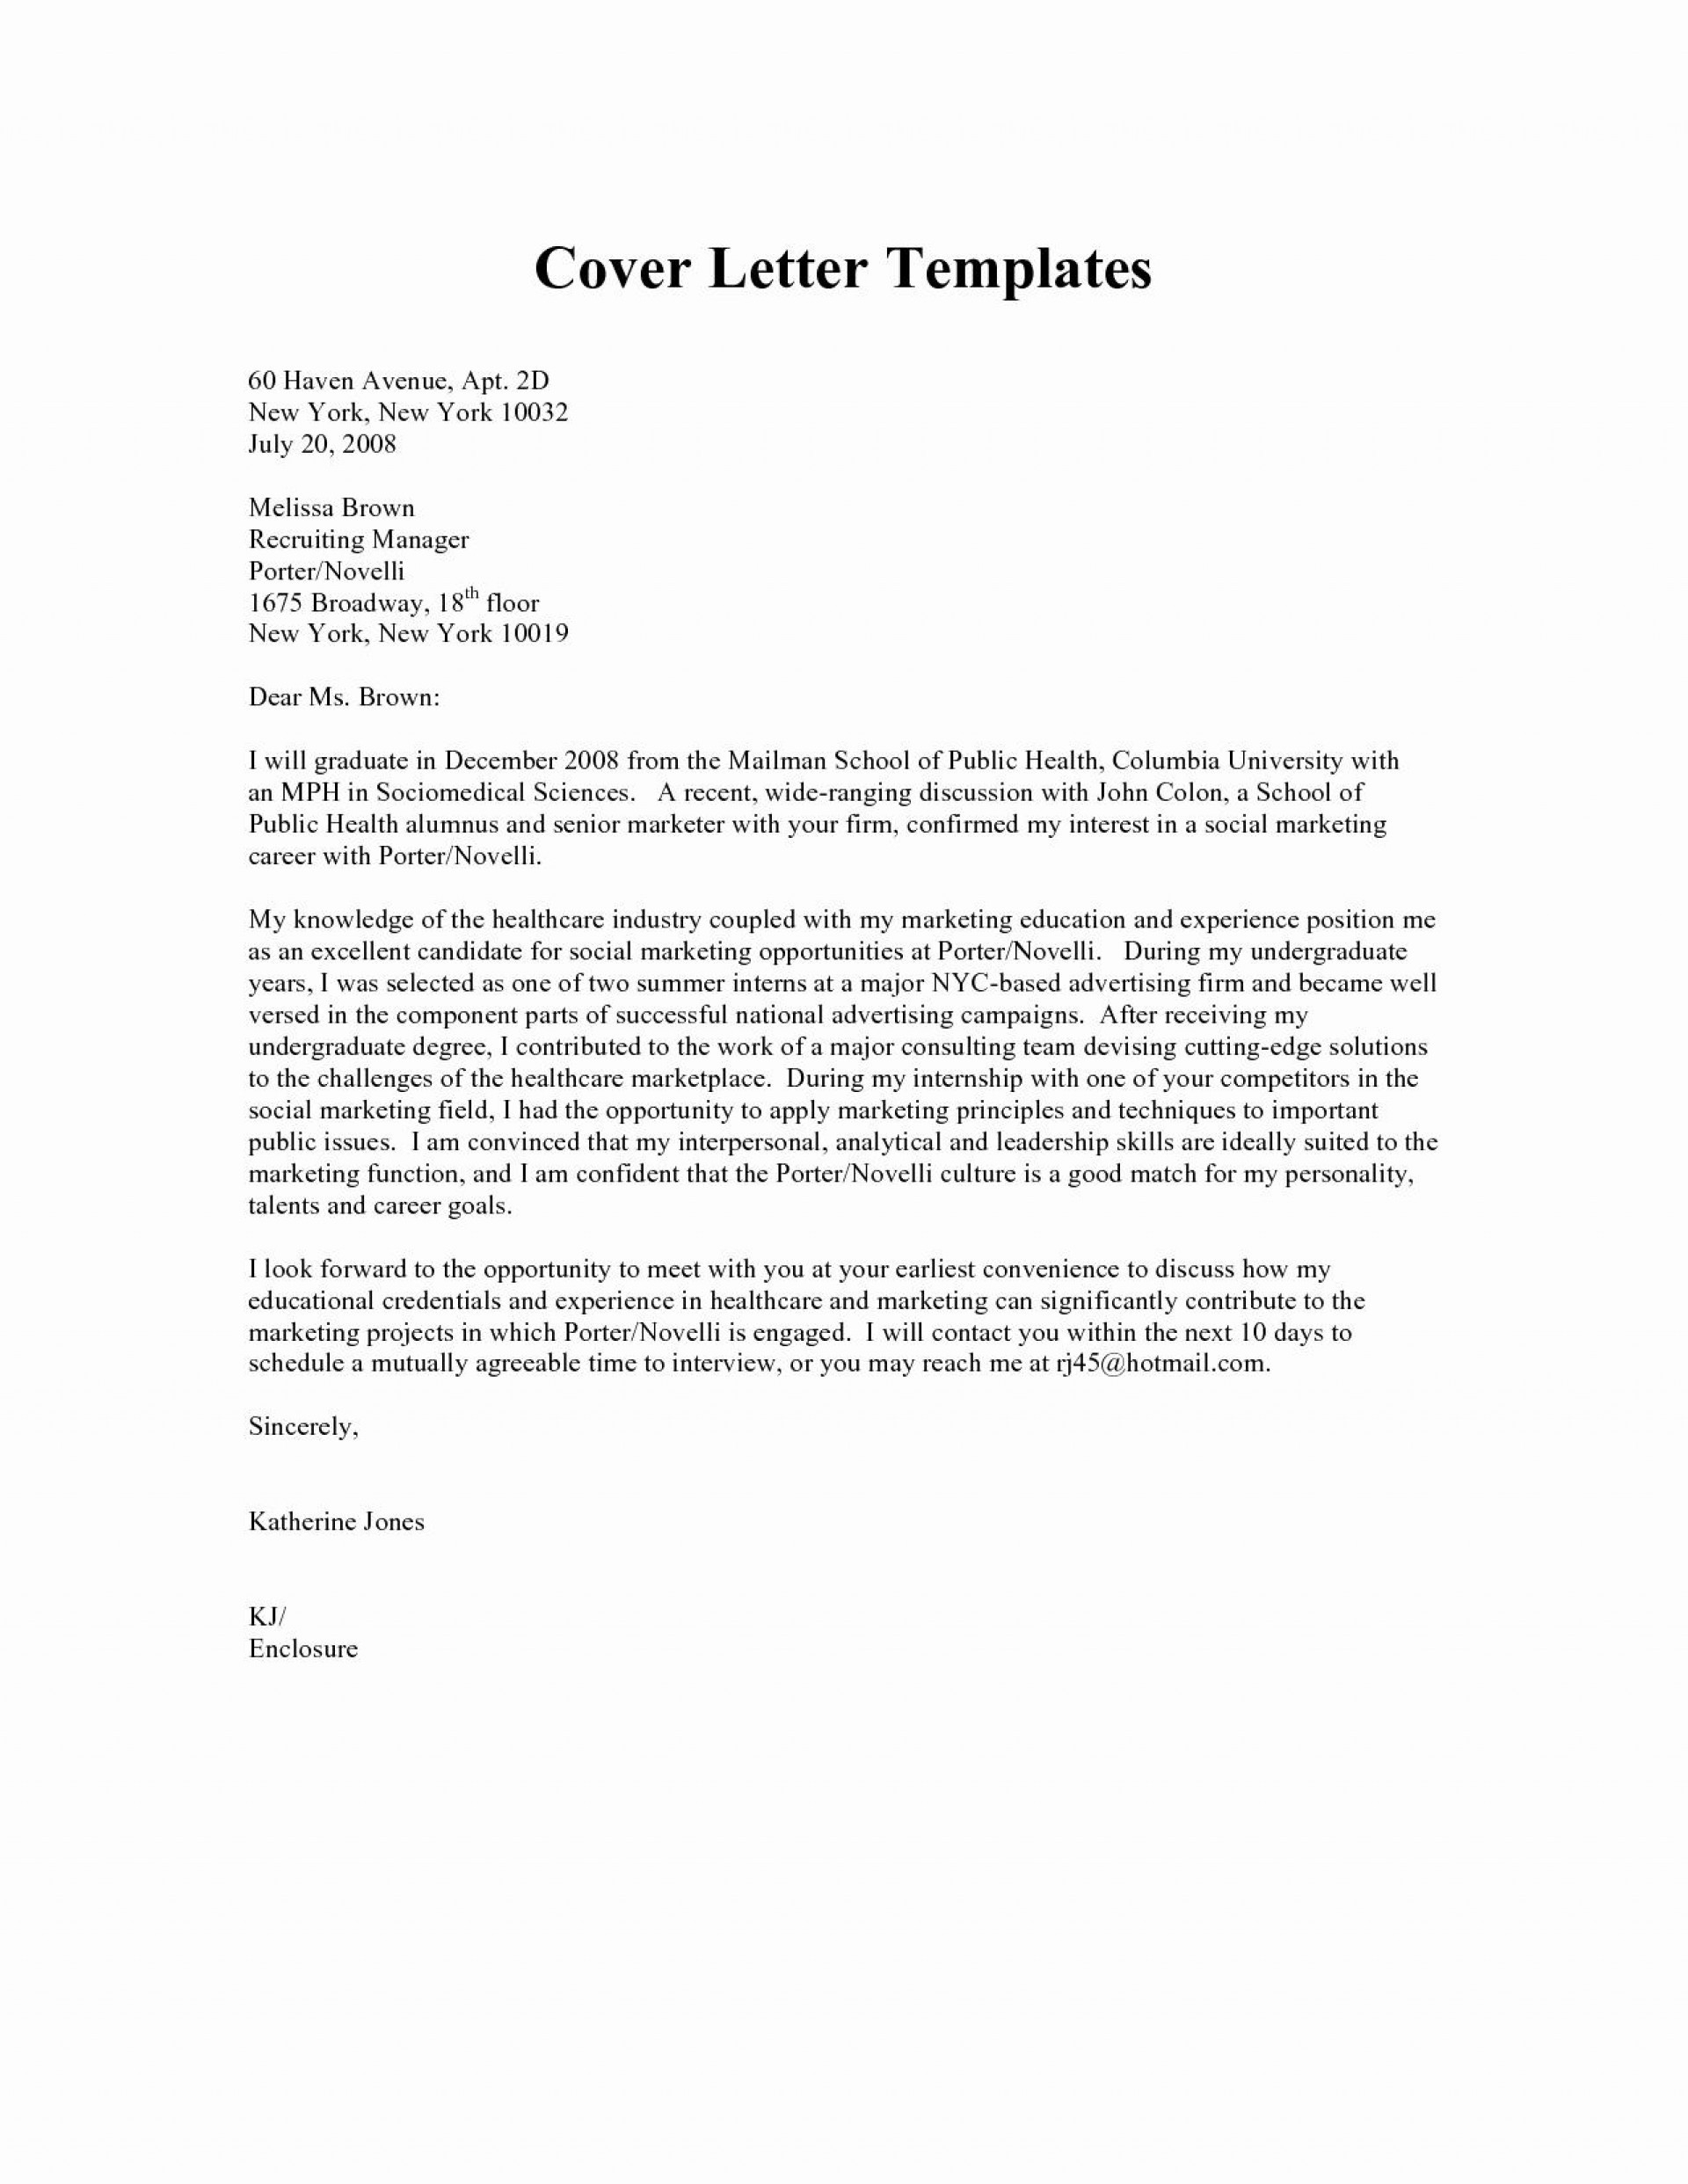 Teacher Cover Letter Example Education Cover Letter Sample Professional 023 Teacher Cover Letter